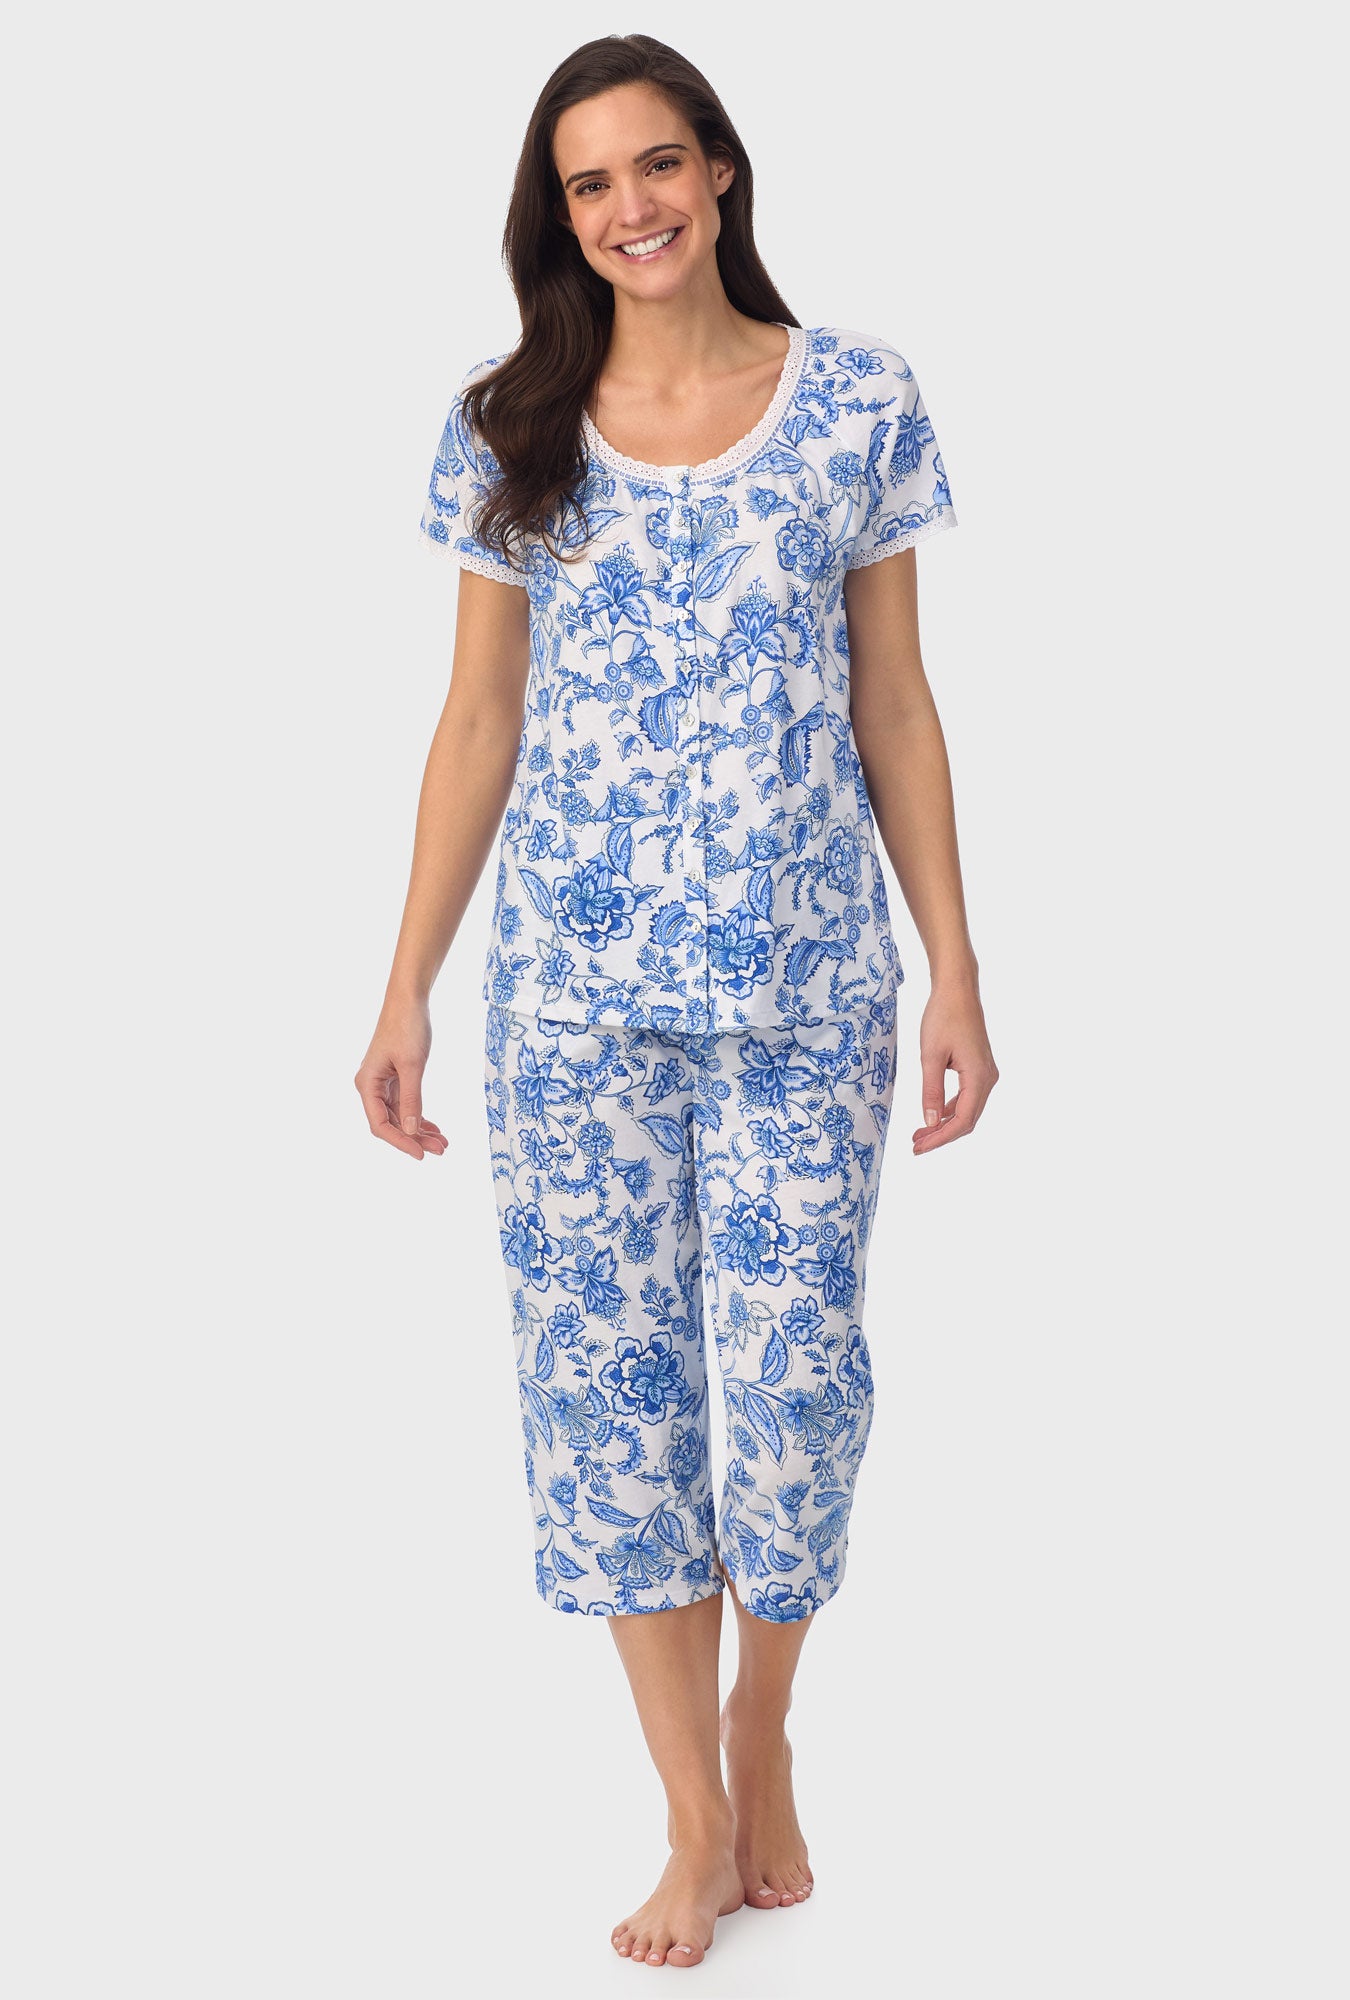 A lady wearing blue short Sleeve Floral Vine Cap Sleeve Capri Pant PJ Set with Colbalt Blue print